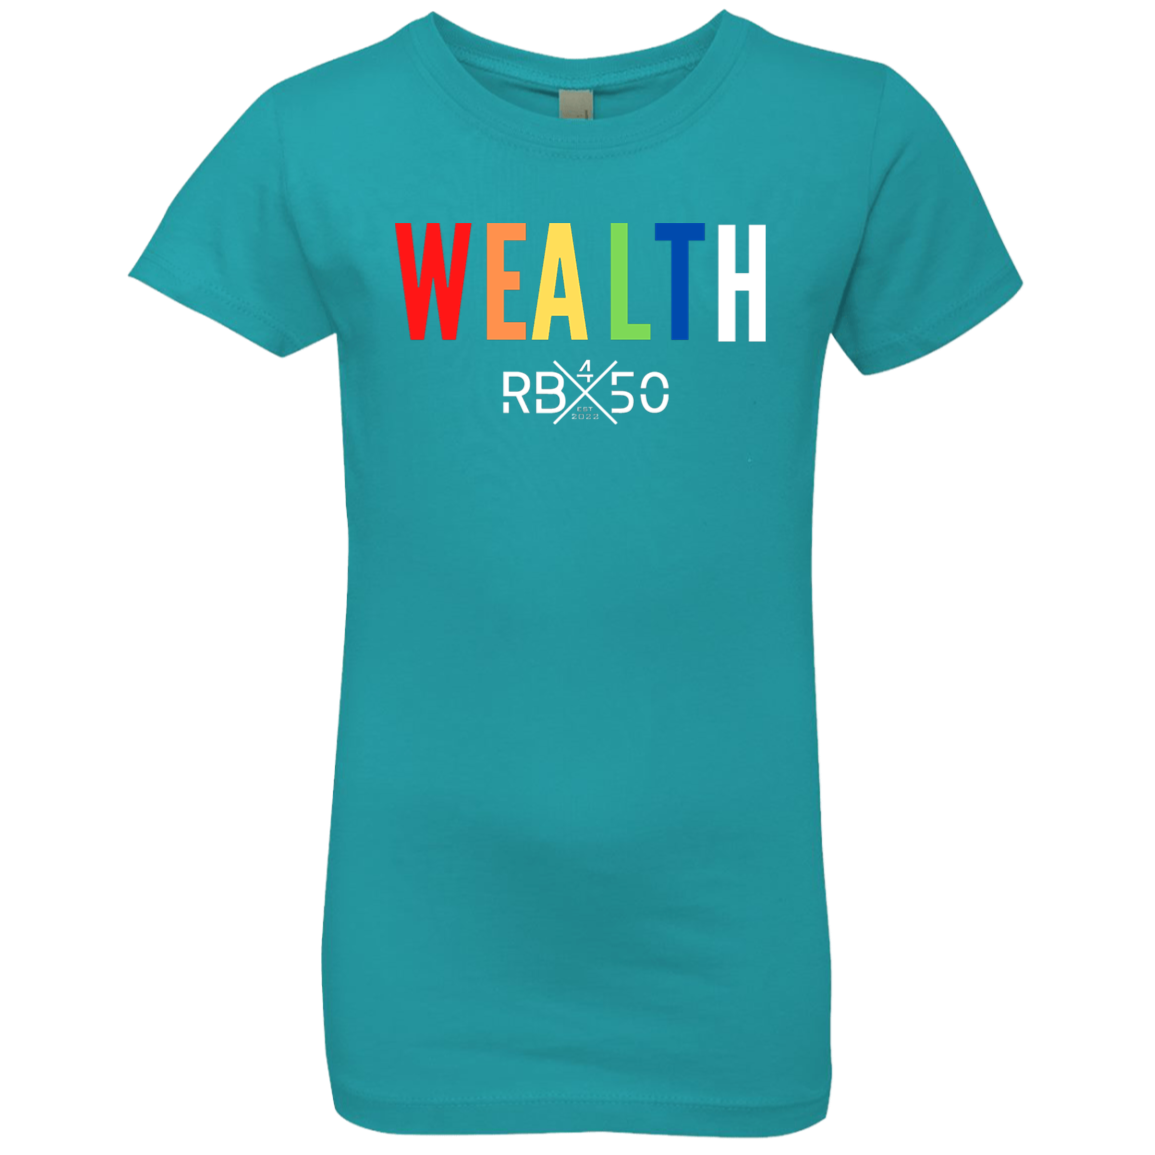 RB450 WEALTH Girls' Princess T-Shirt